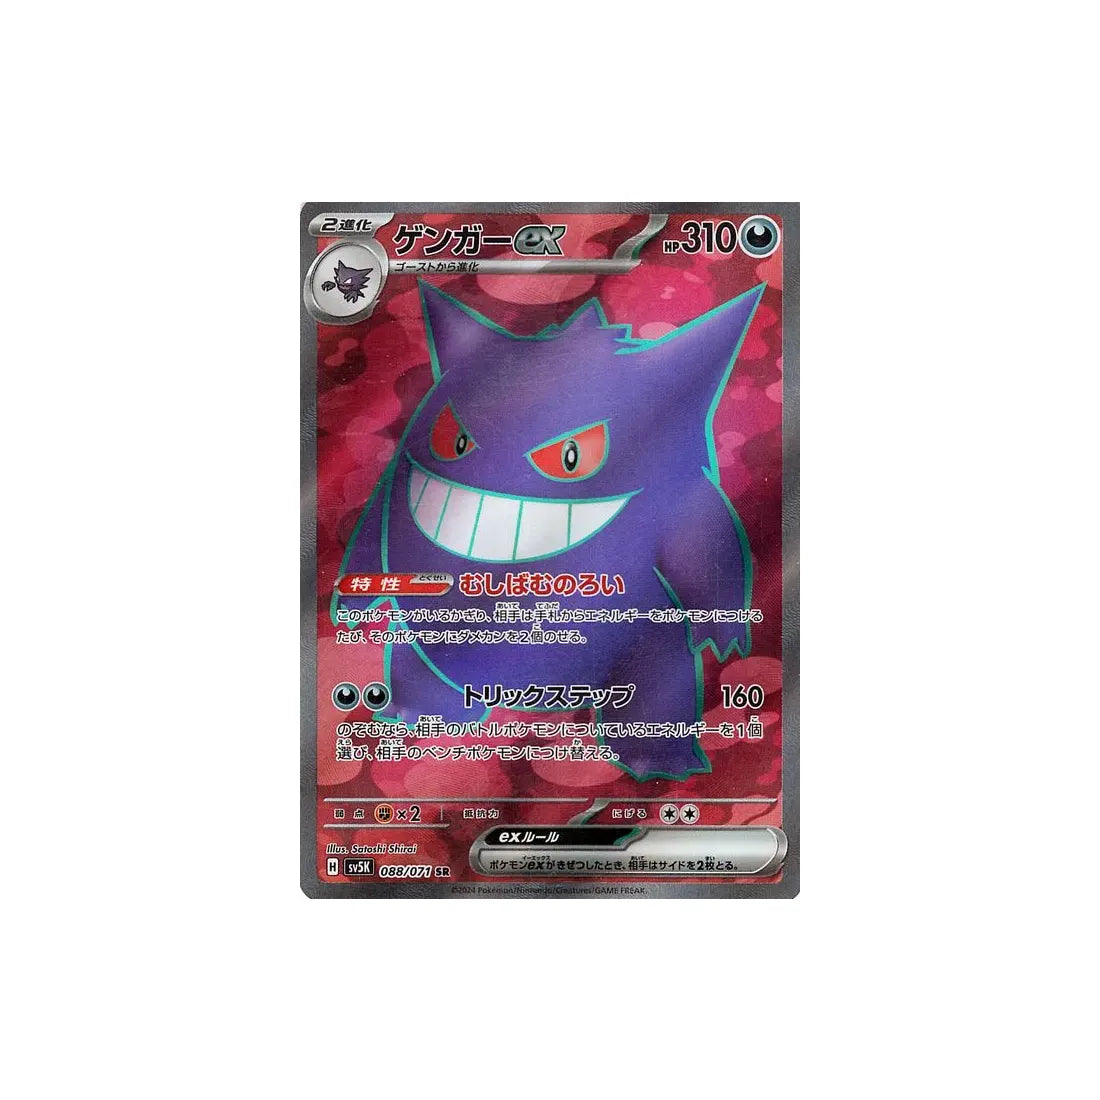 Pokémon card Wild Force SV5K 088/071: Gengar EX 